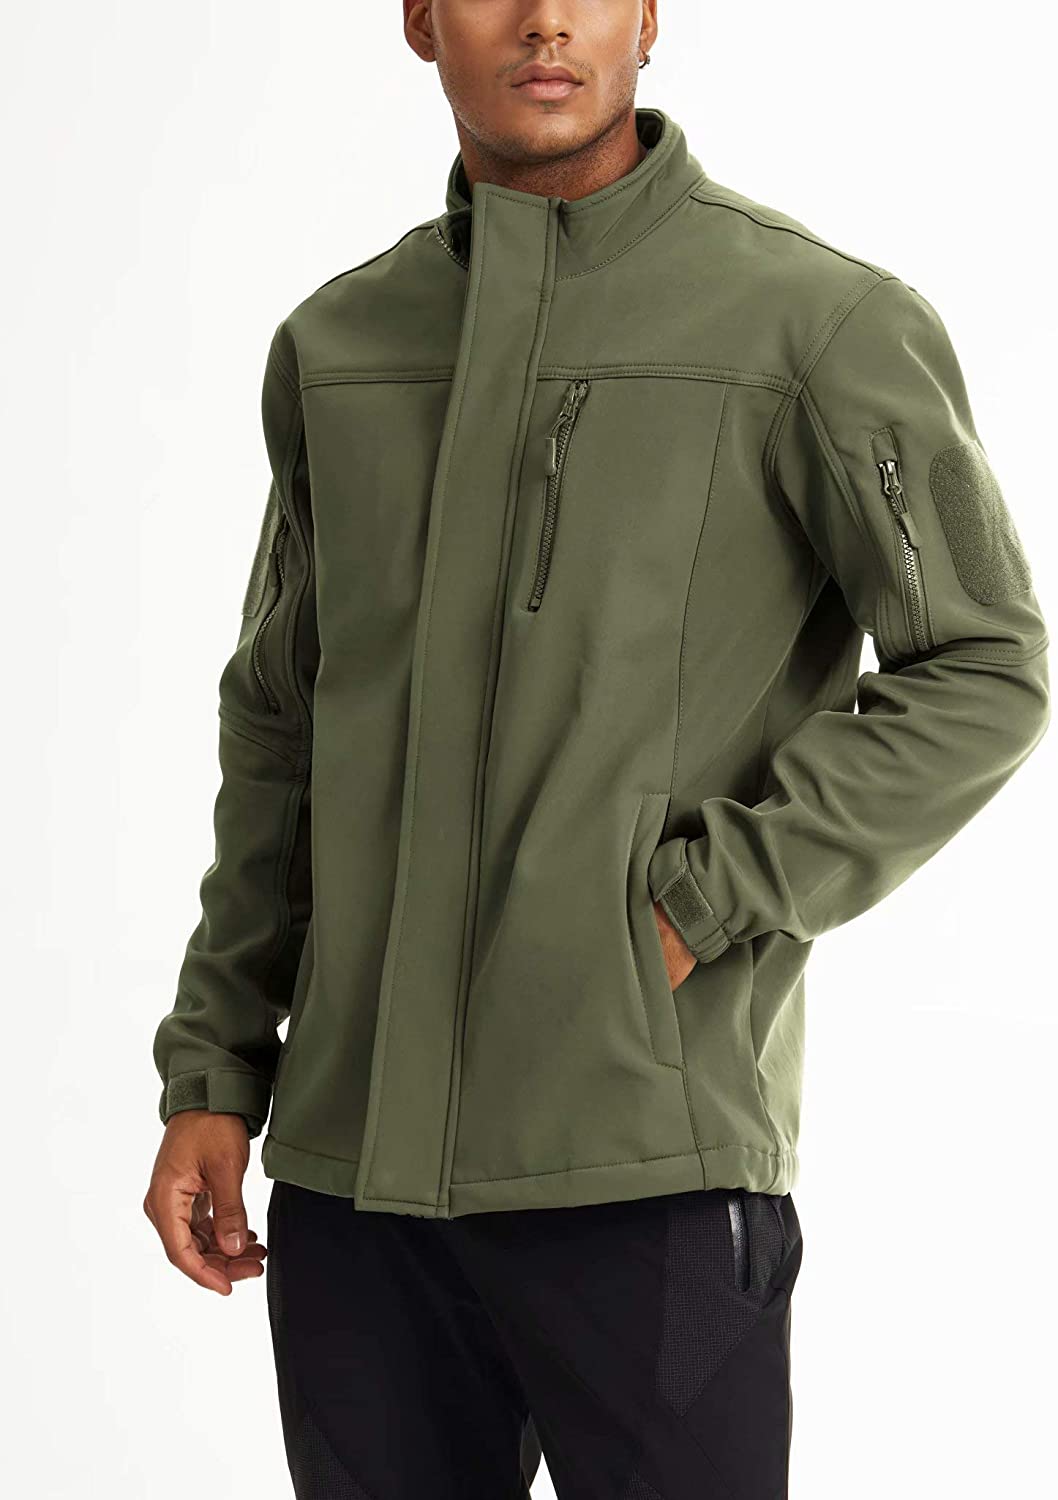 MAGCOMSEN Men's Water Resistant Softshell Jacket with Fleece Lining ...